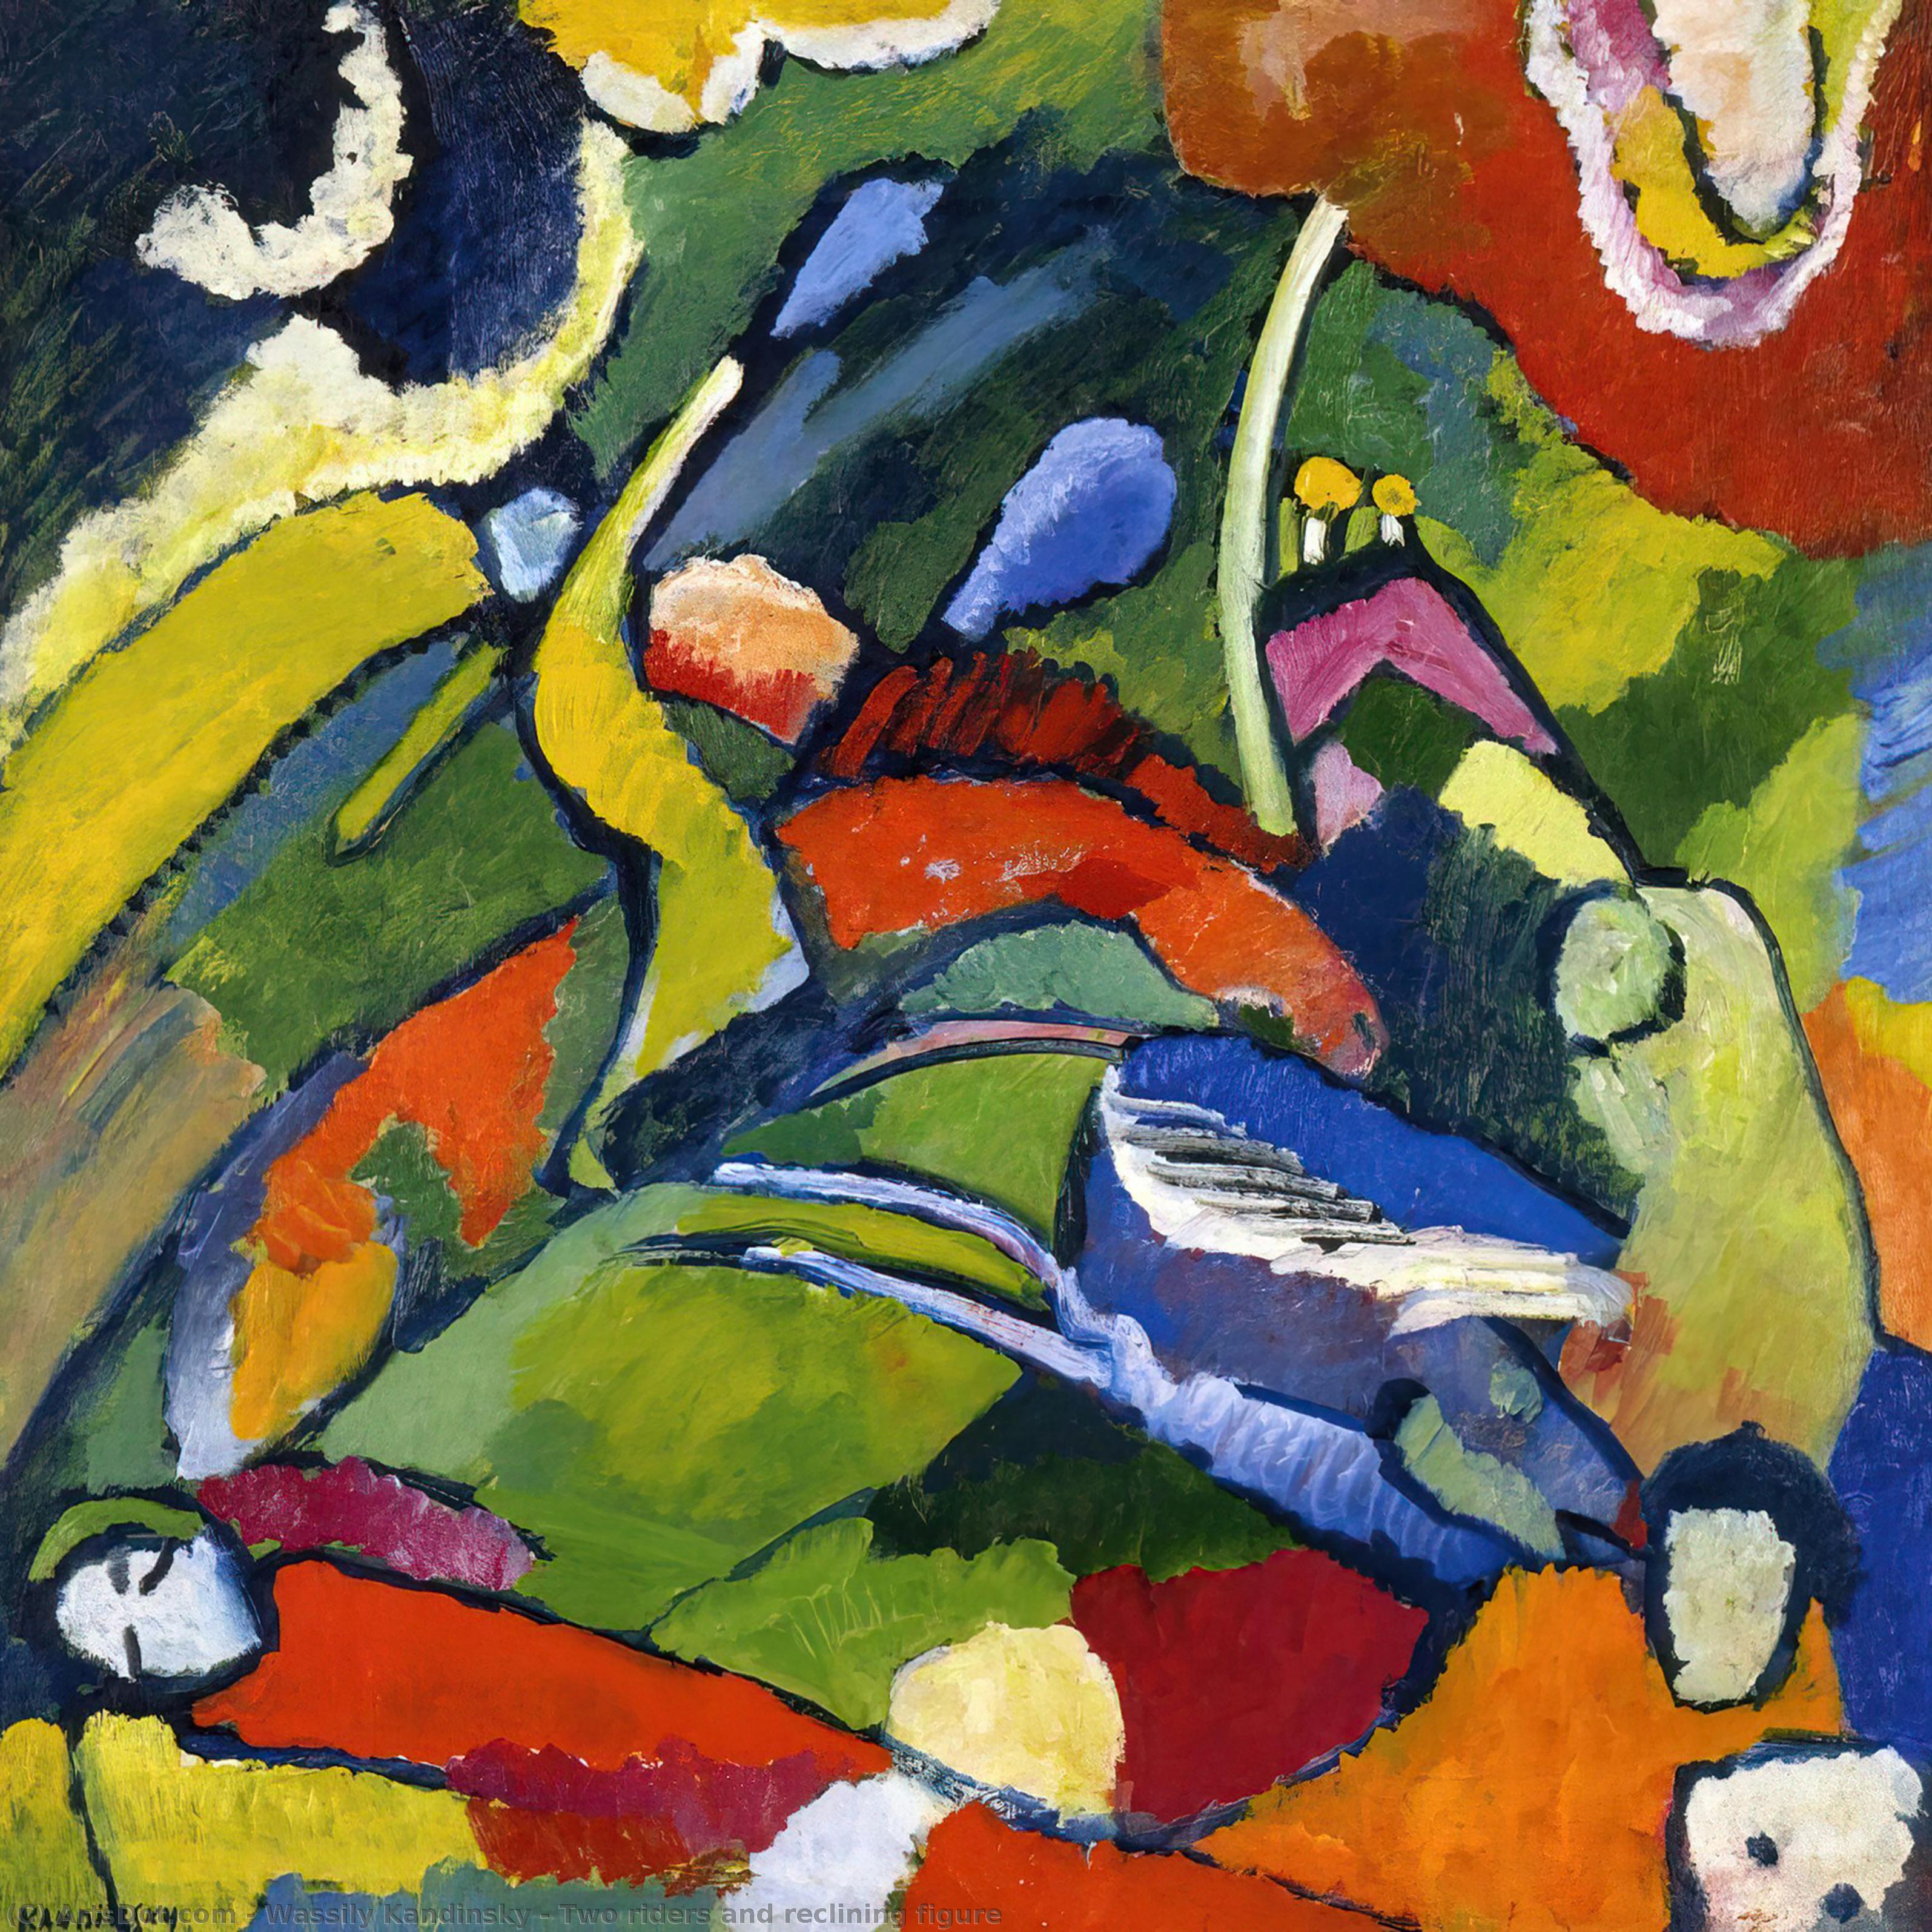 Wikoo.org - موسوعة الفنون الجميلة - اللوحة، العمل الفني Wassily Kandinsky - Two riders and reclining figure